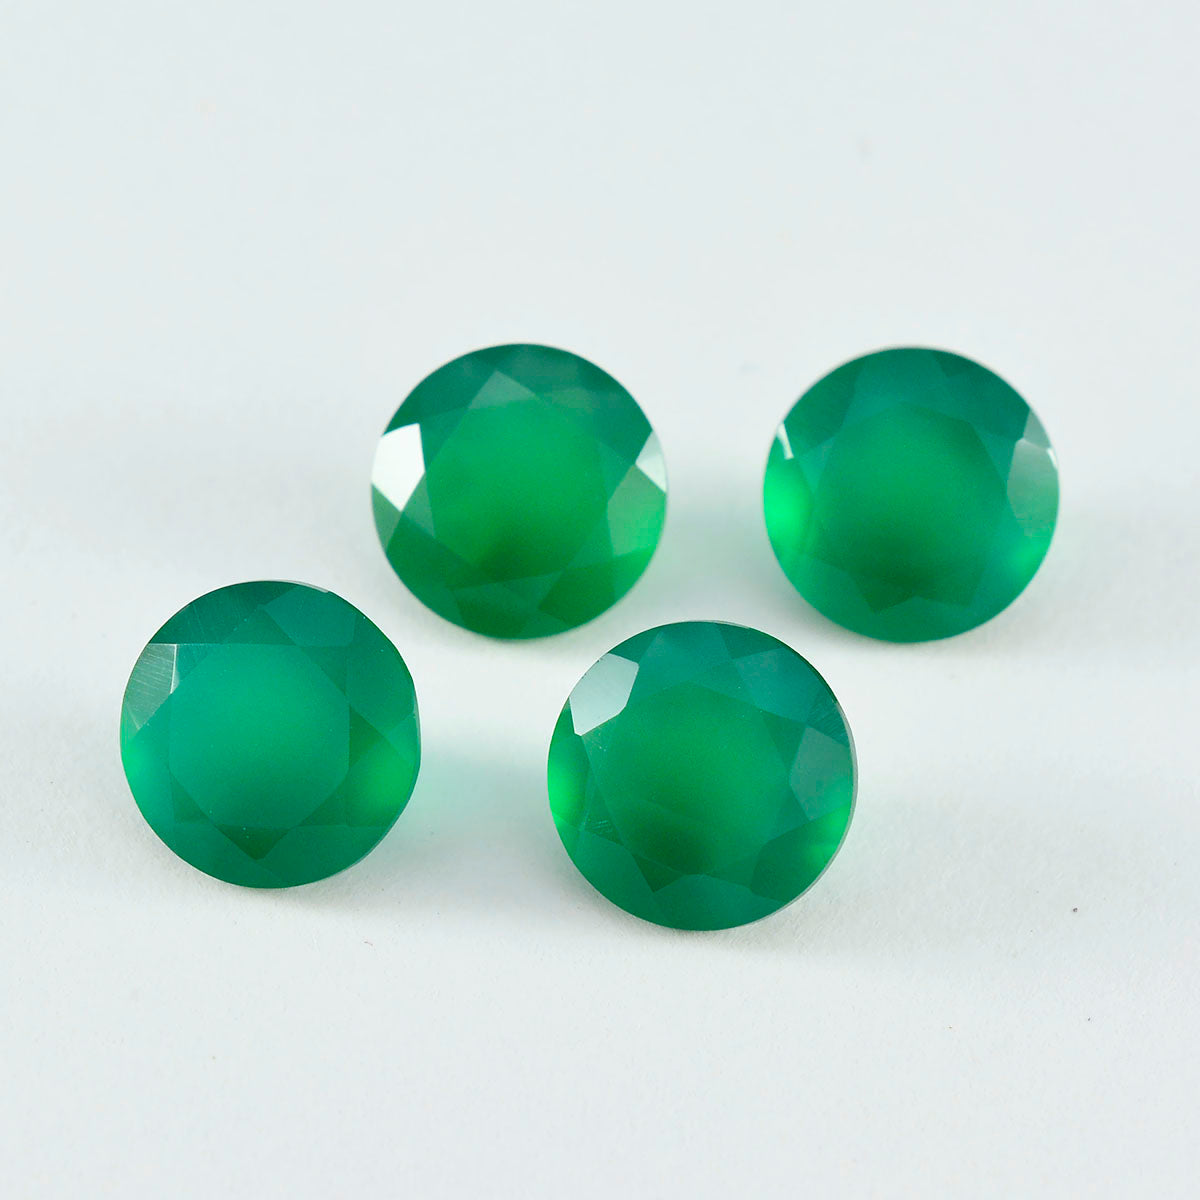 Riyogems 1PC Genuine Green Onyx Faceted 7x7 mm Round Shape Nice Quality Stone